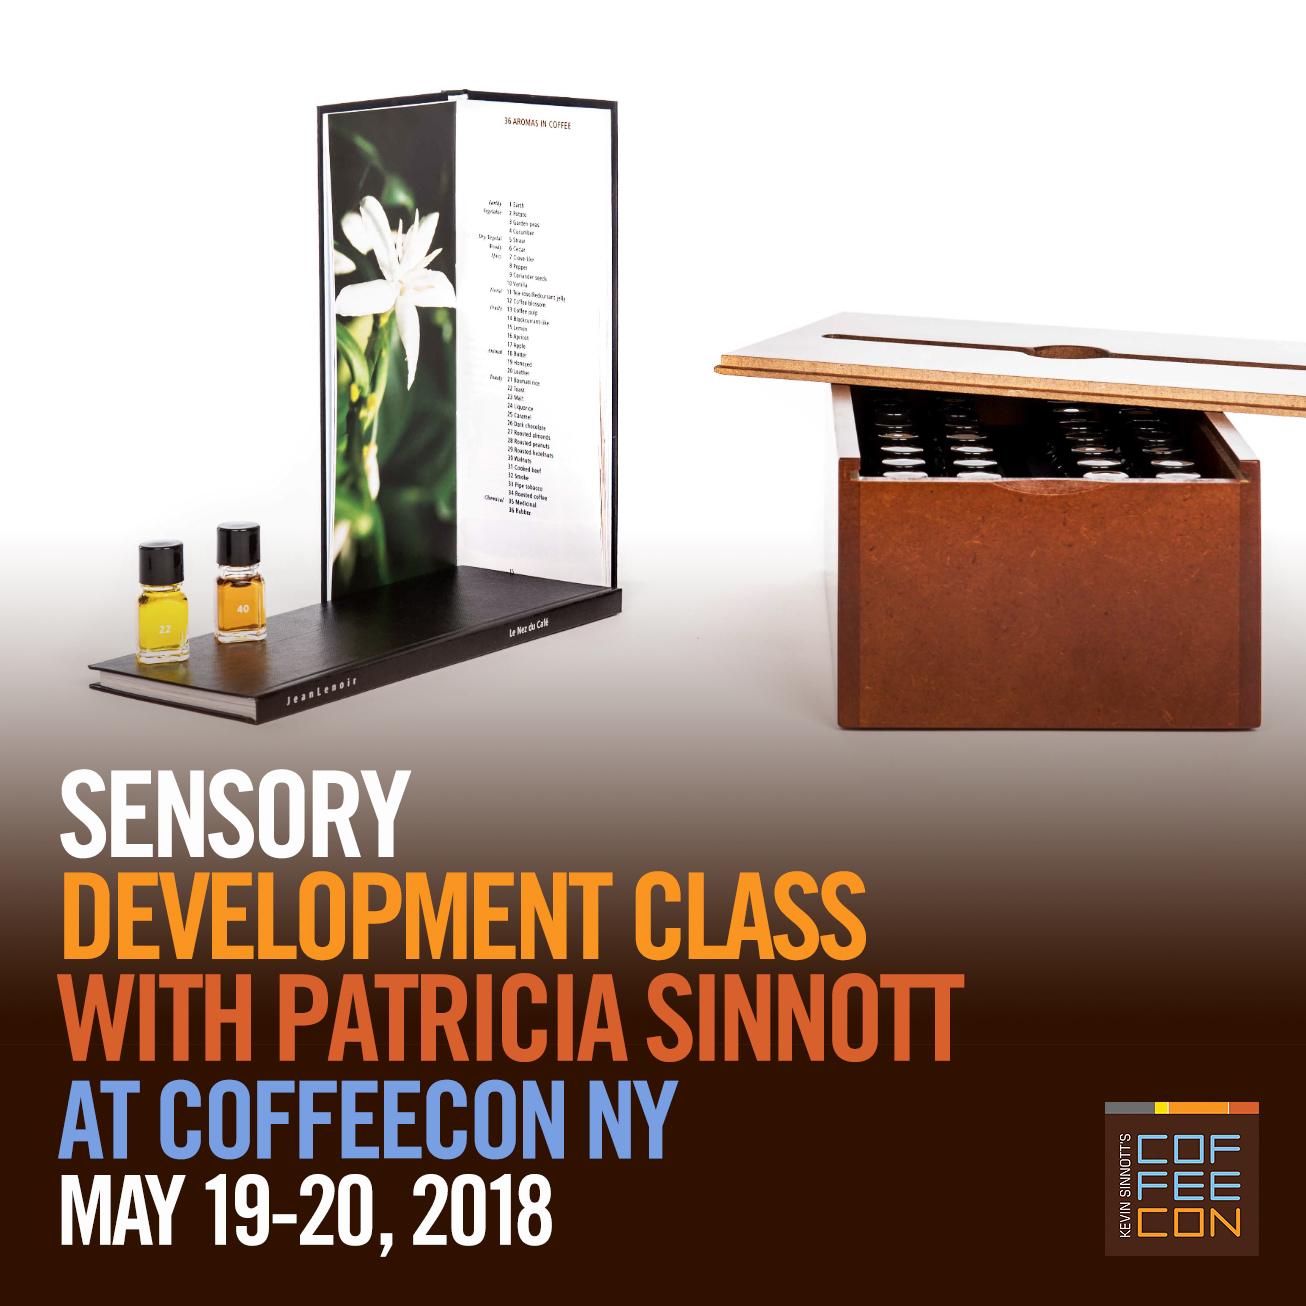 Sensory Development Class at CoffeeConNY